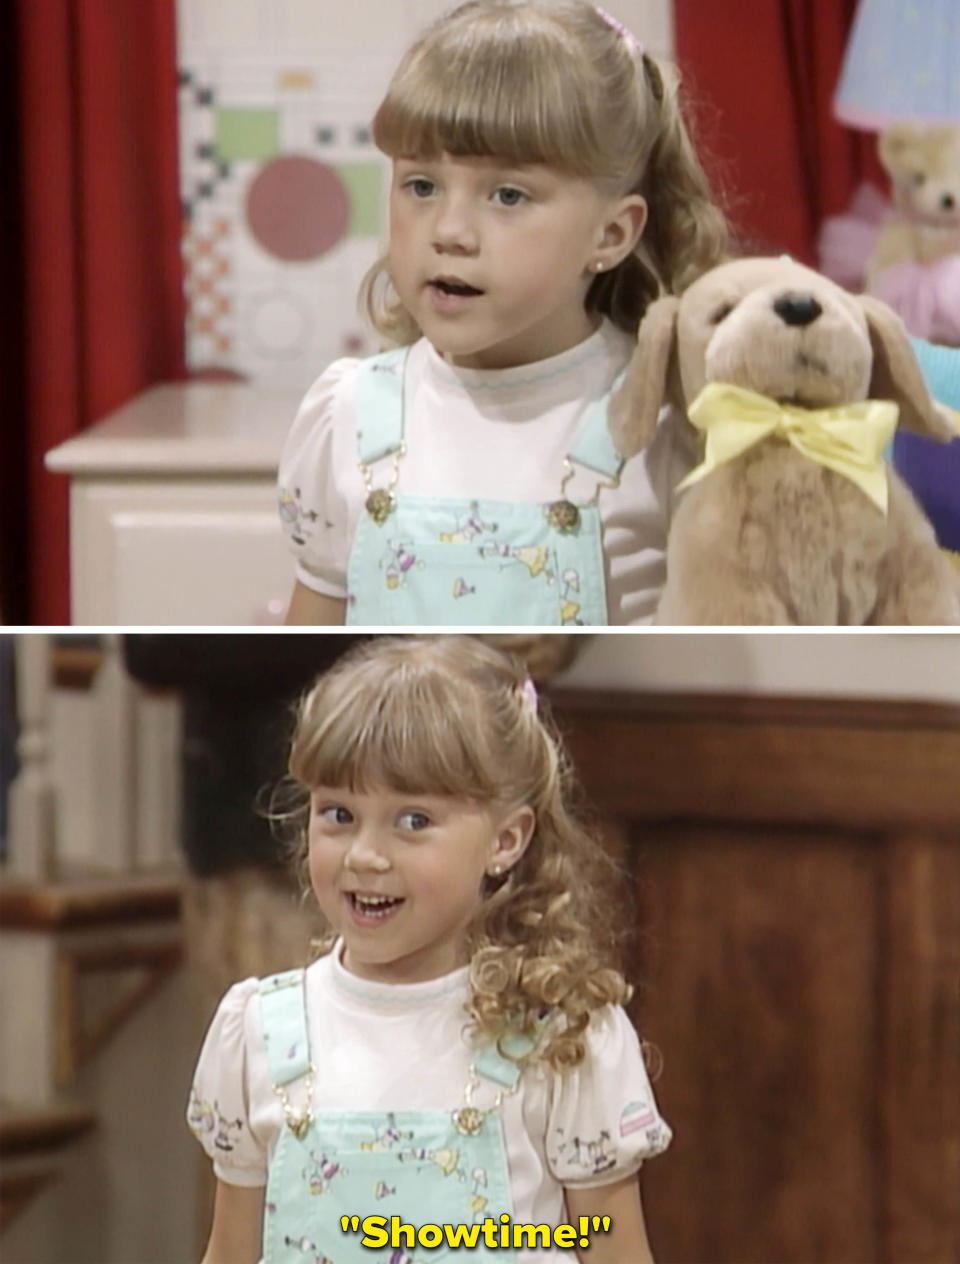 Stephanie as a little girl holding a stuffed animal; Stephanie saying, "Showtime!"